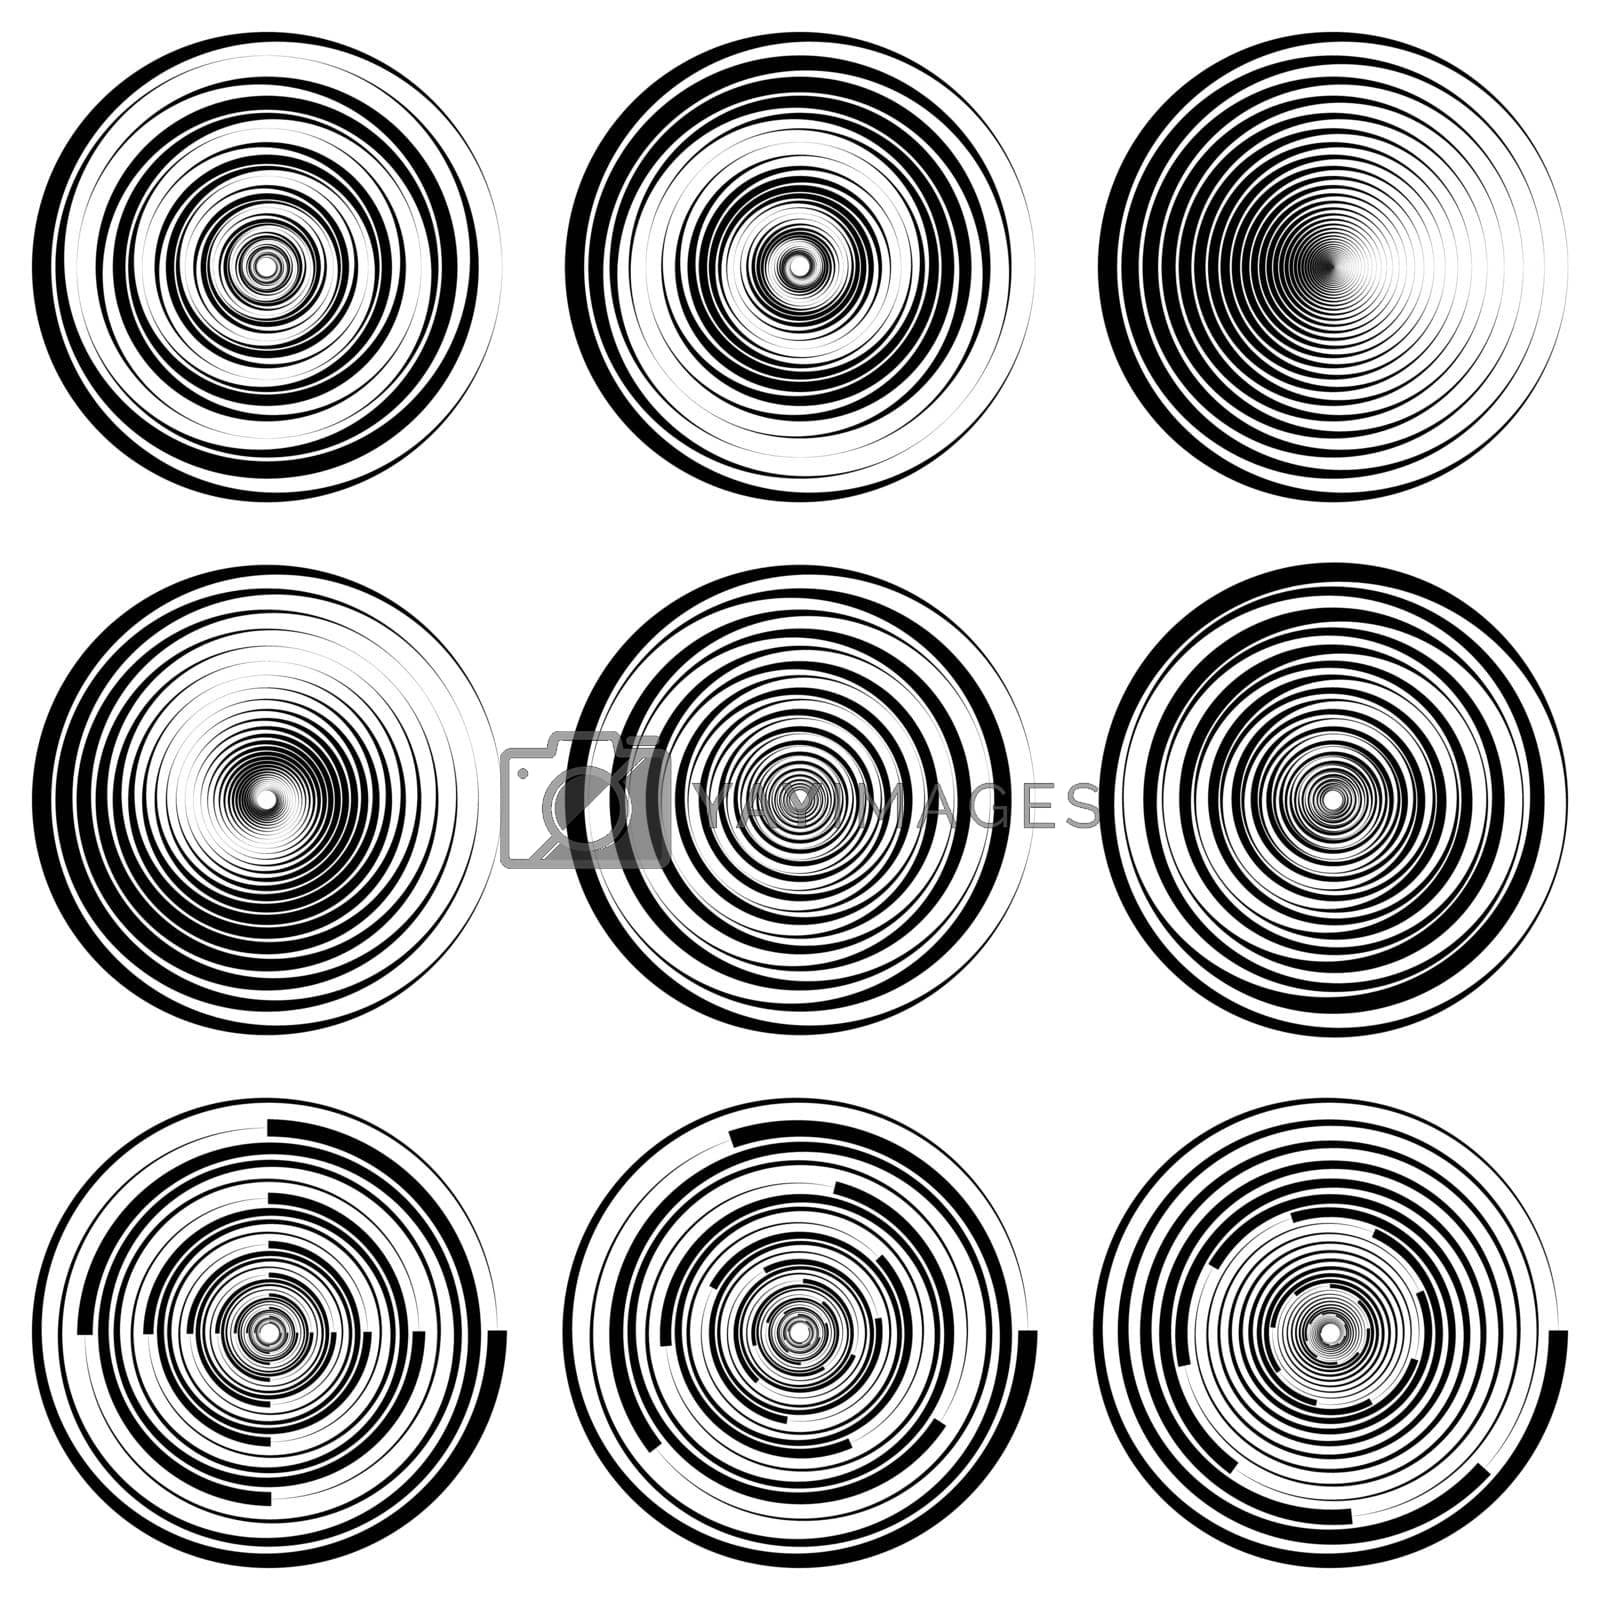 Royalty free image of Set round spiral circle filigree watermark, vector EPS dynamic swoosh, template logo counterfeit protection by koksikoks